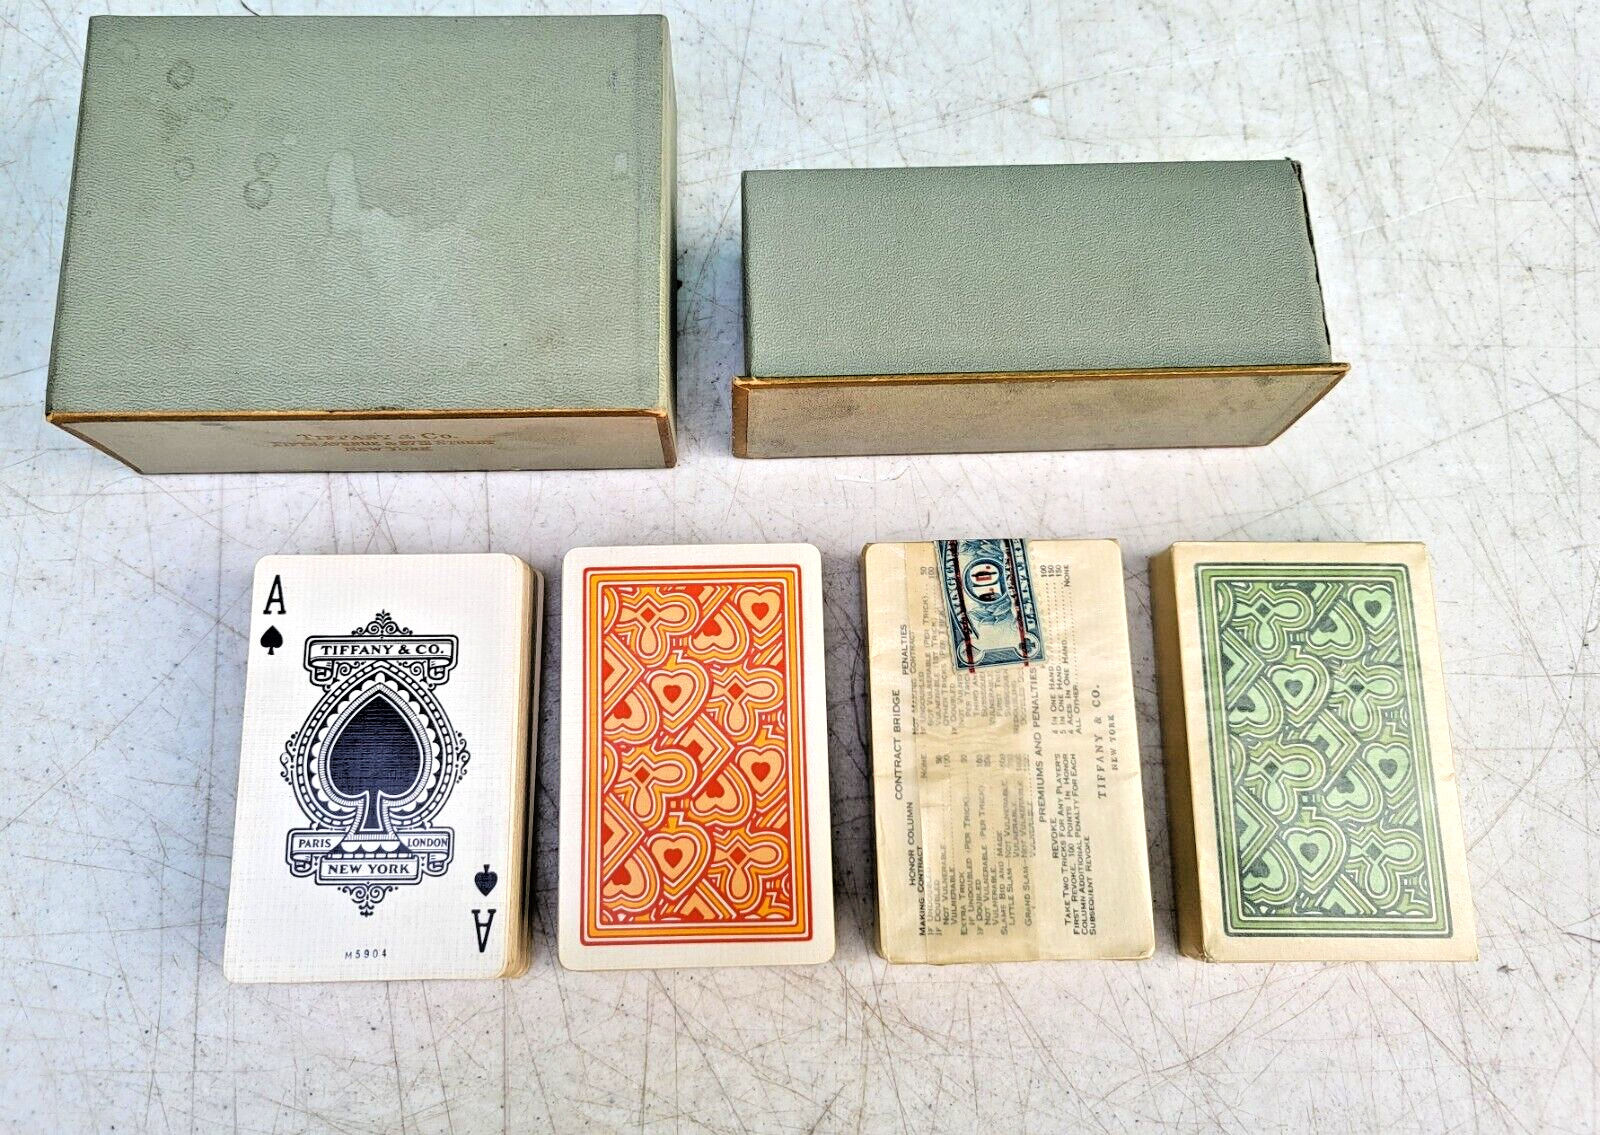 Tiffany & Co Playing Card 4 Deck Set 2 OPEN DECKS & 2 SEALED BRIDGE DECKS c1930s